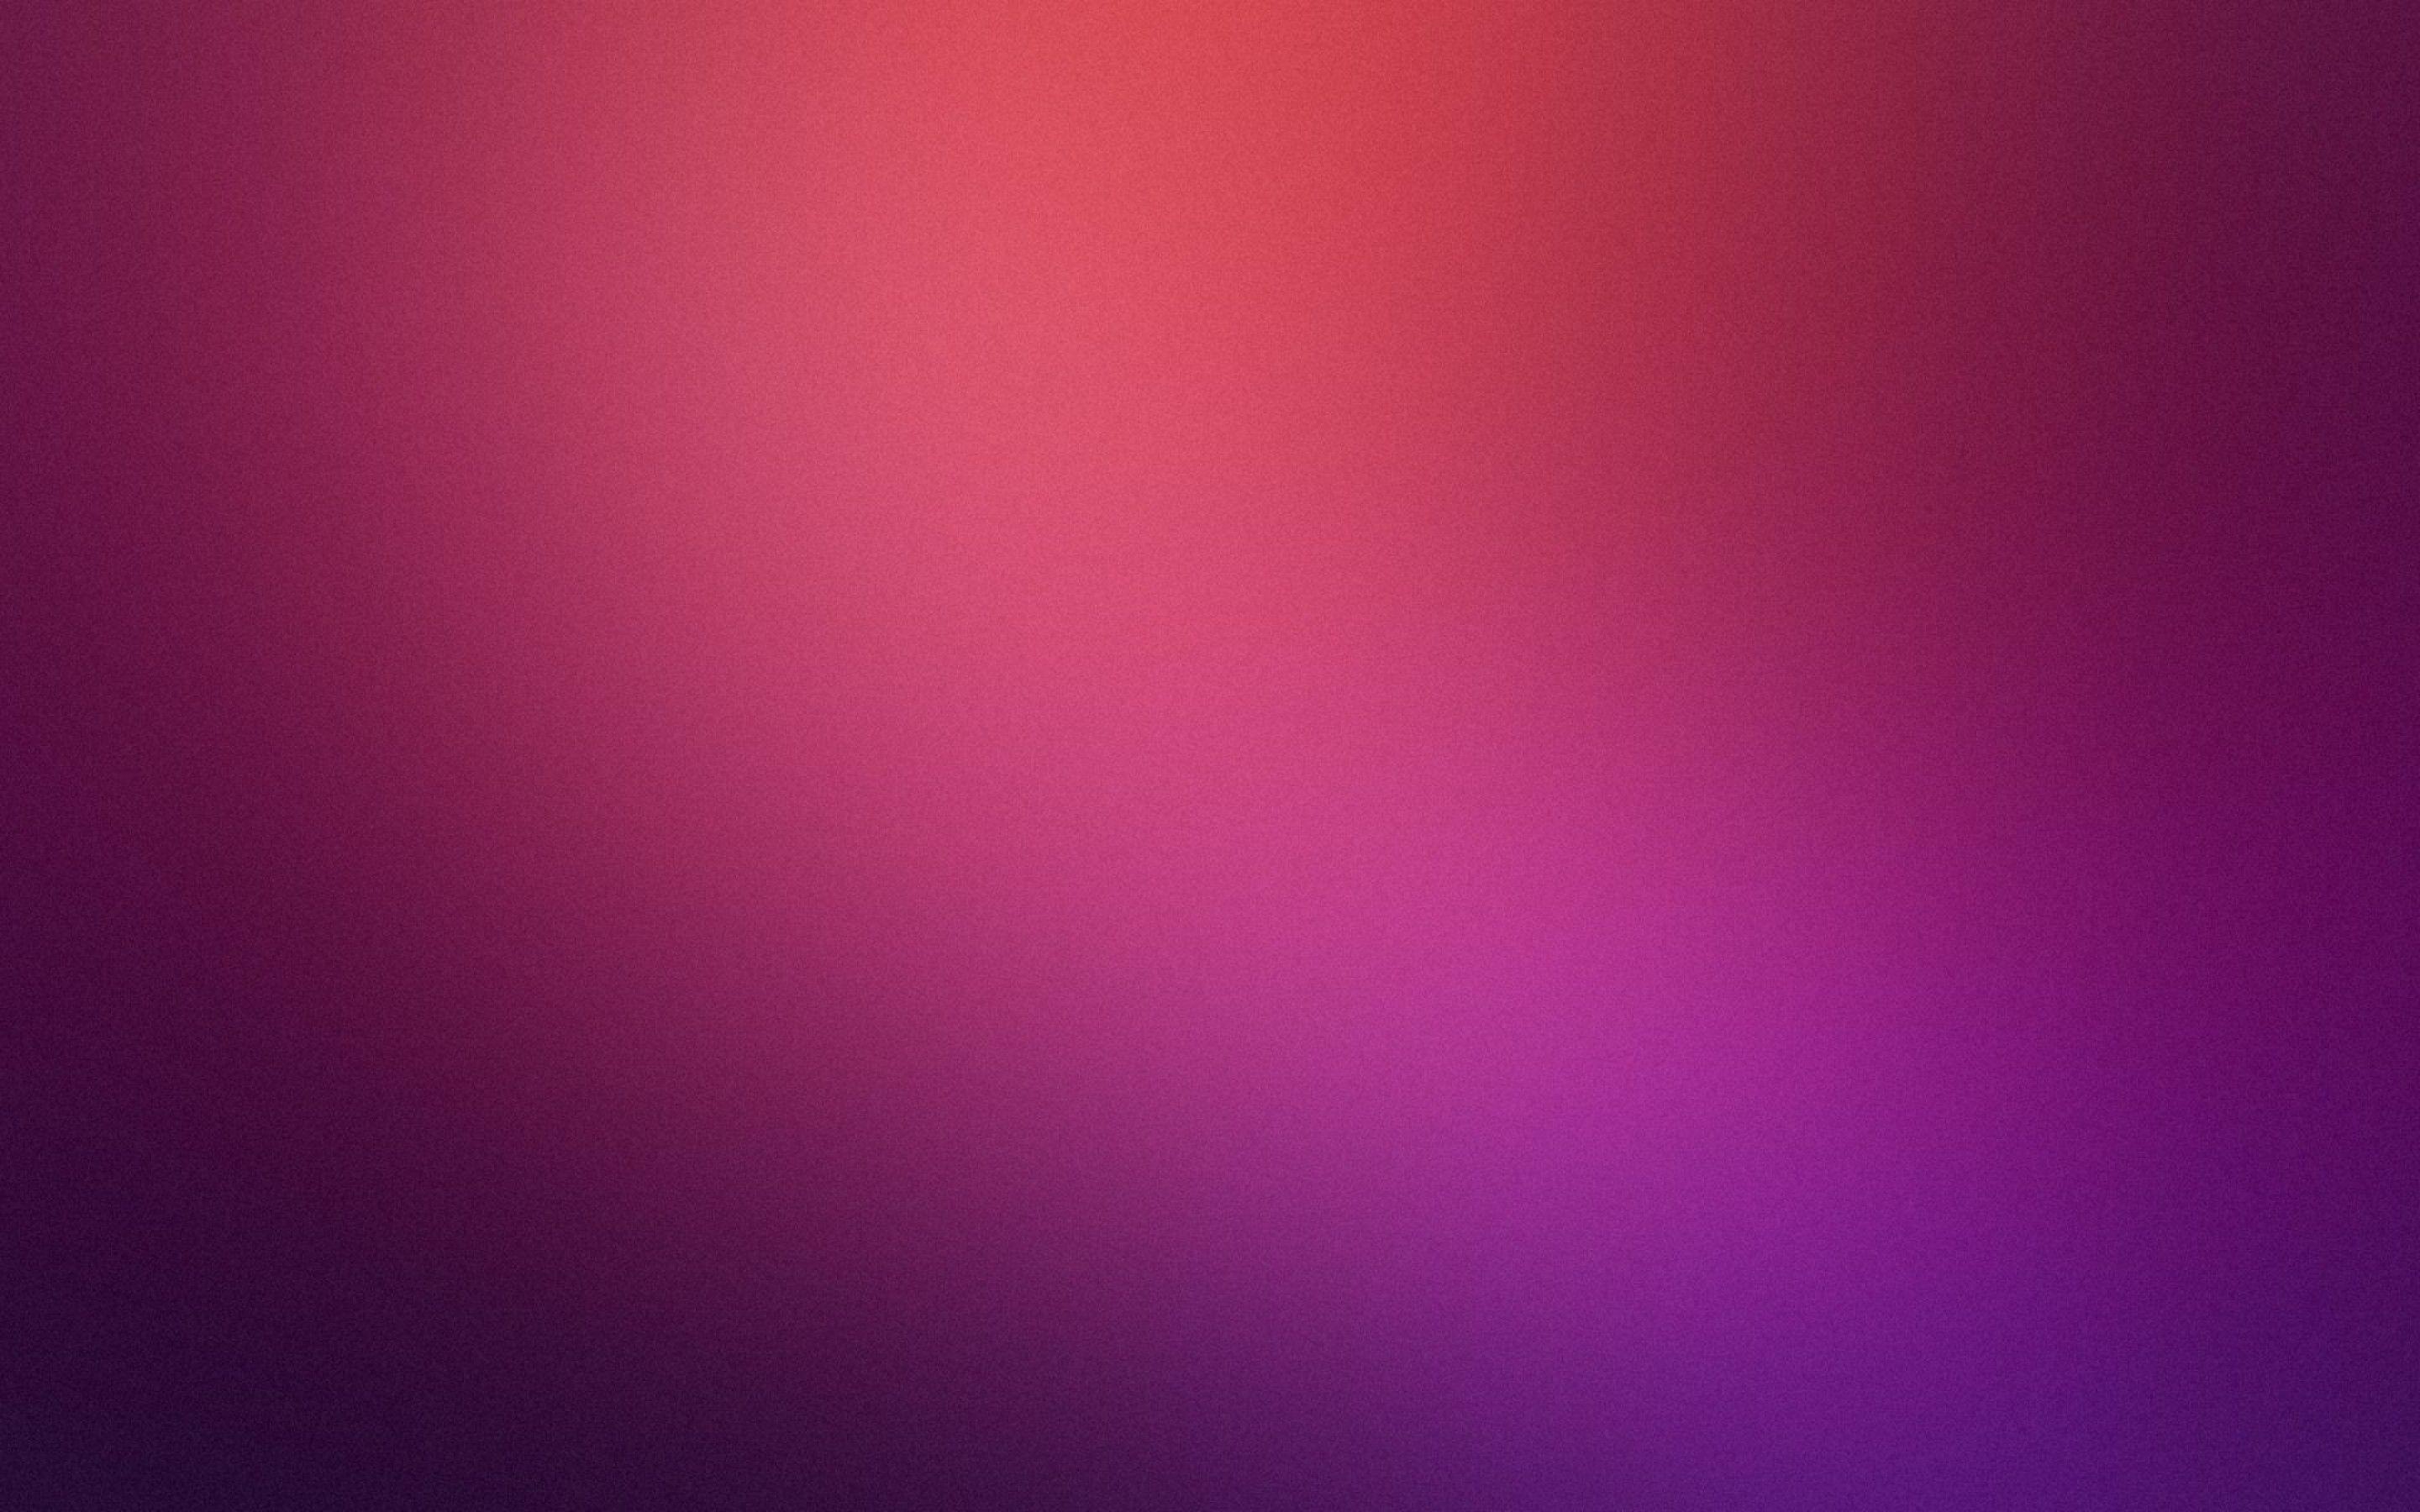 Aesthetic Purple Pink Desktop Wallpapers - Top Free ...